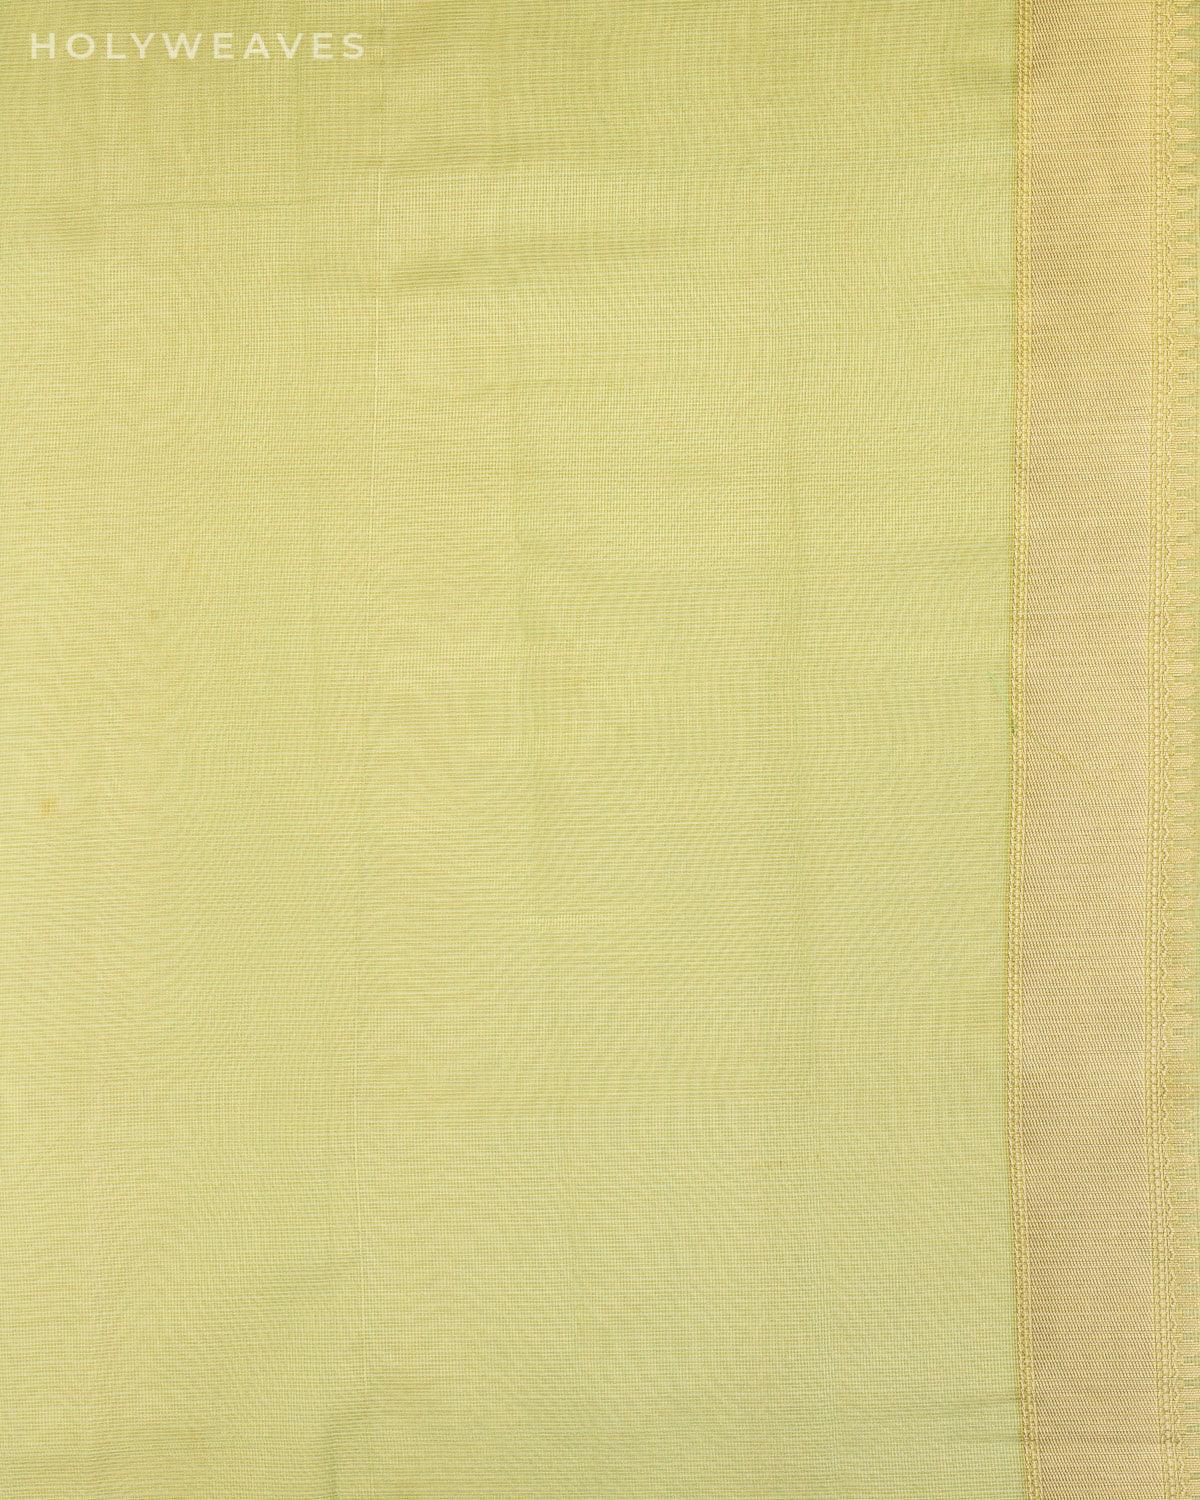 Metallic Green Banarasi Jaal Alfi Sona Rupa Cutwork Brocade Woven Kota Tissue Saree - By HolyWeaves, Benares